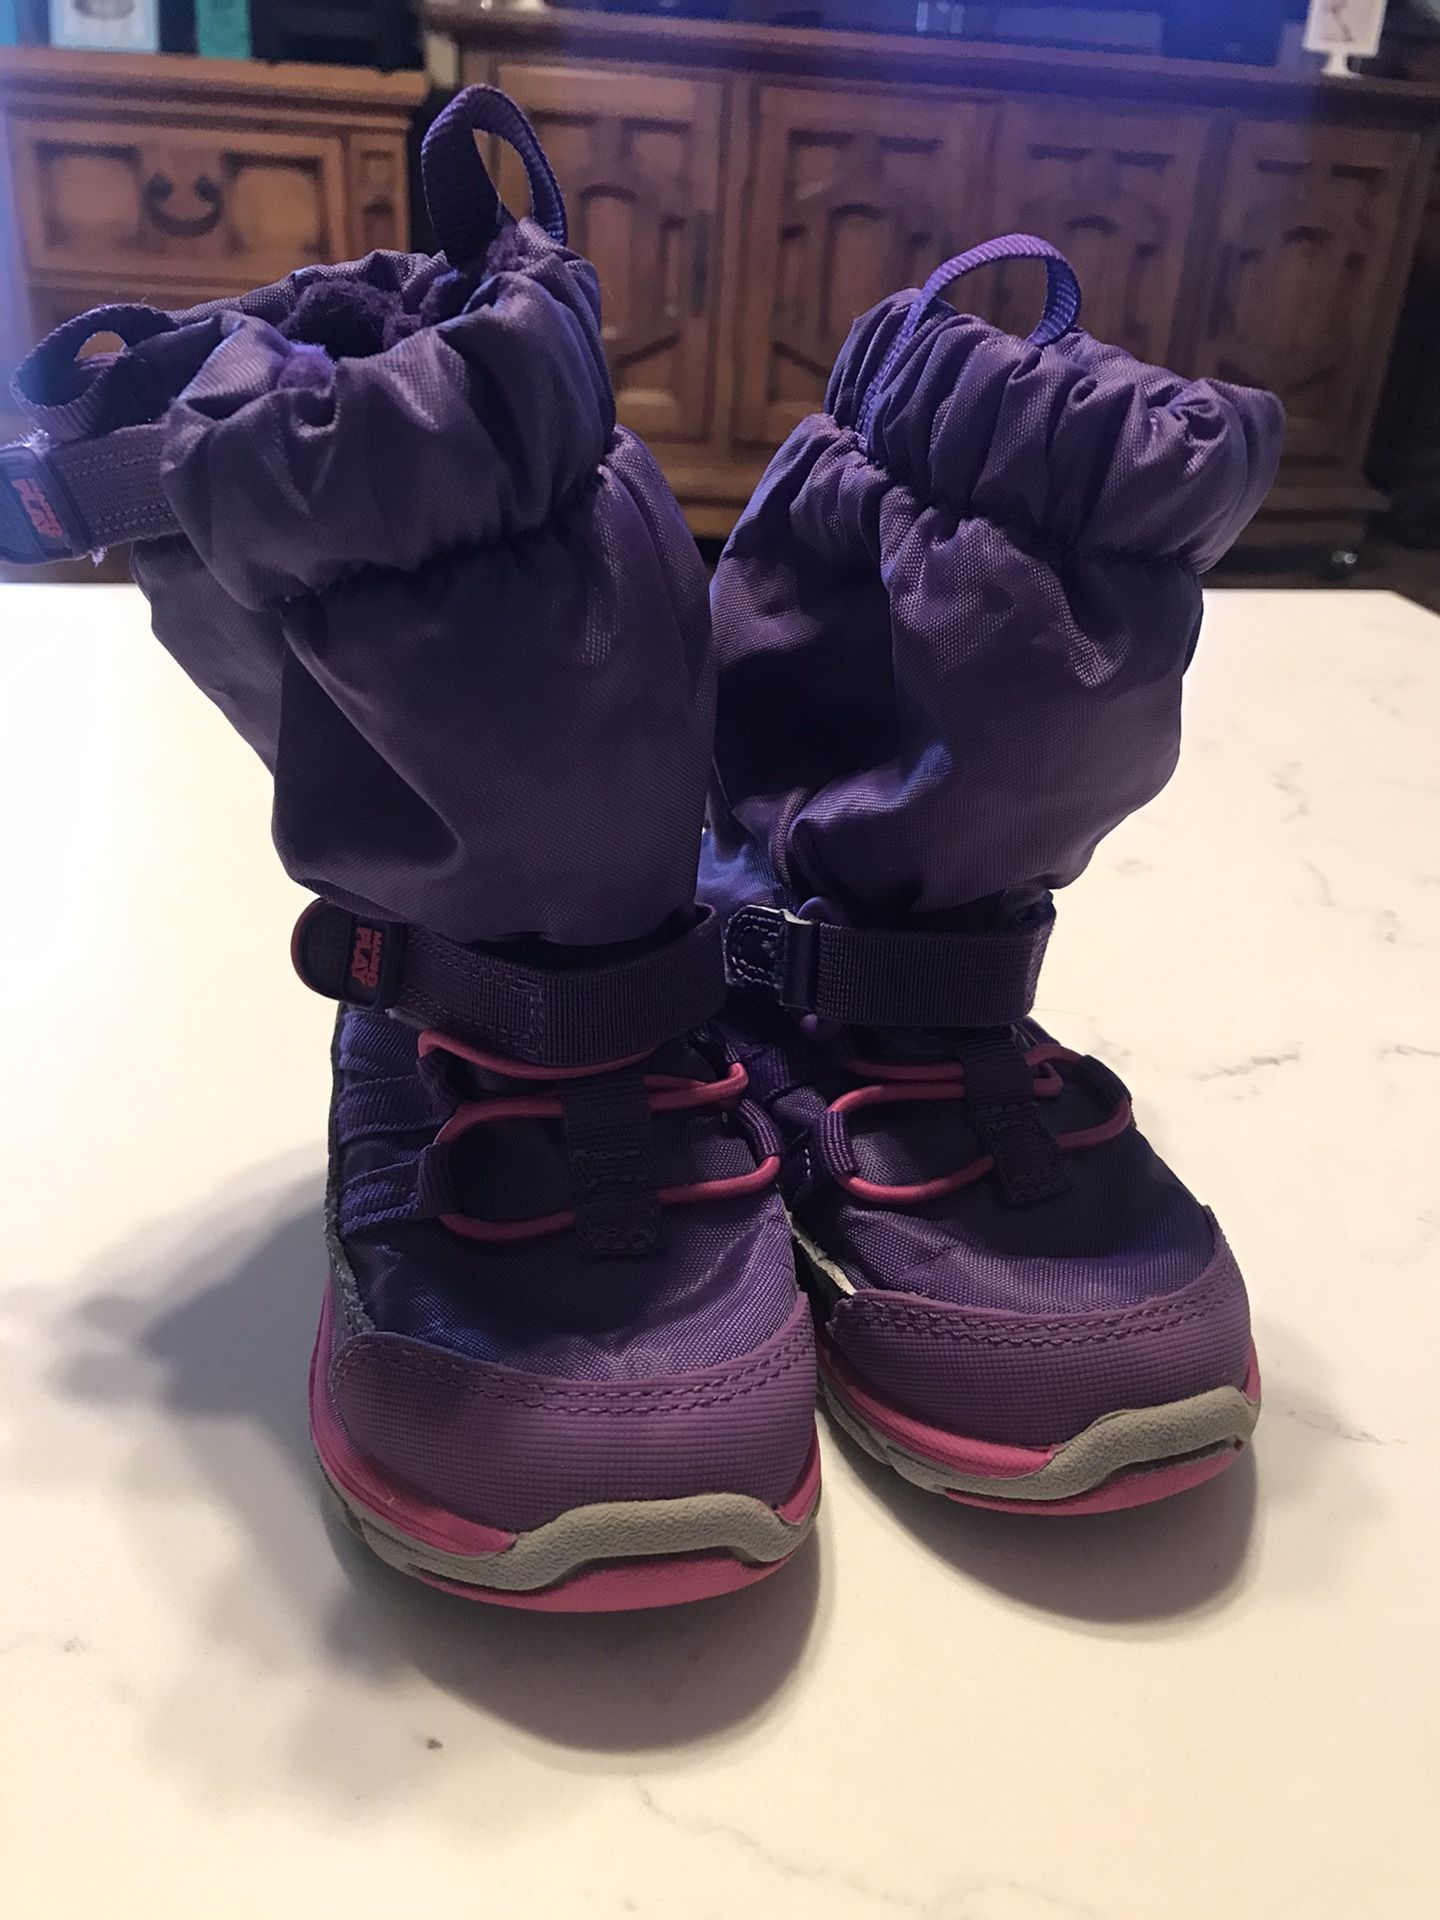 5.5 girls winter/ snow boots